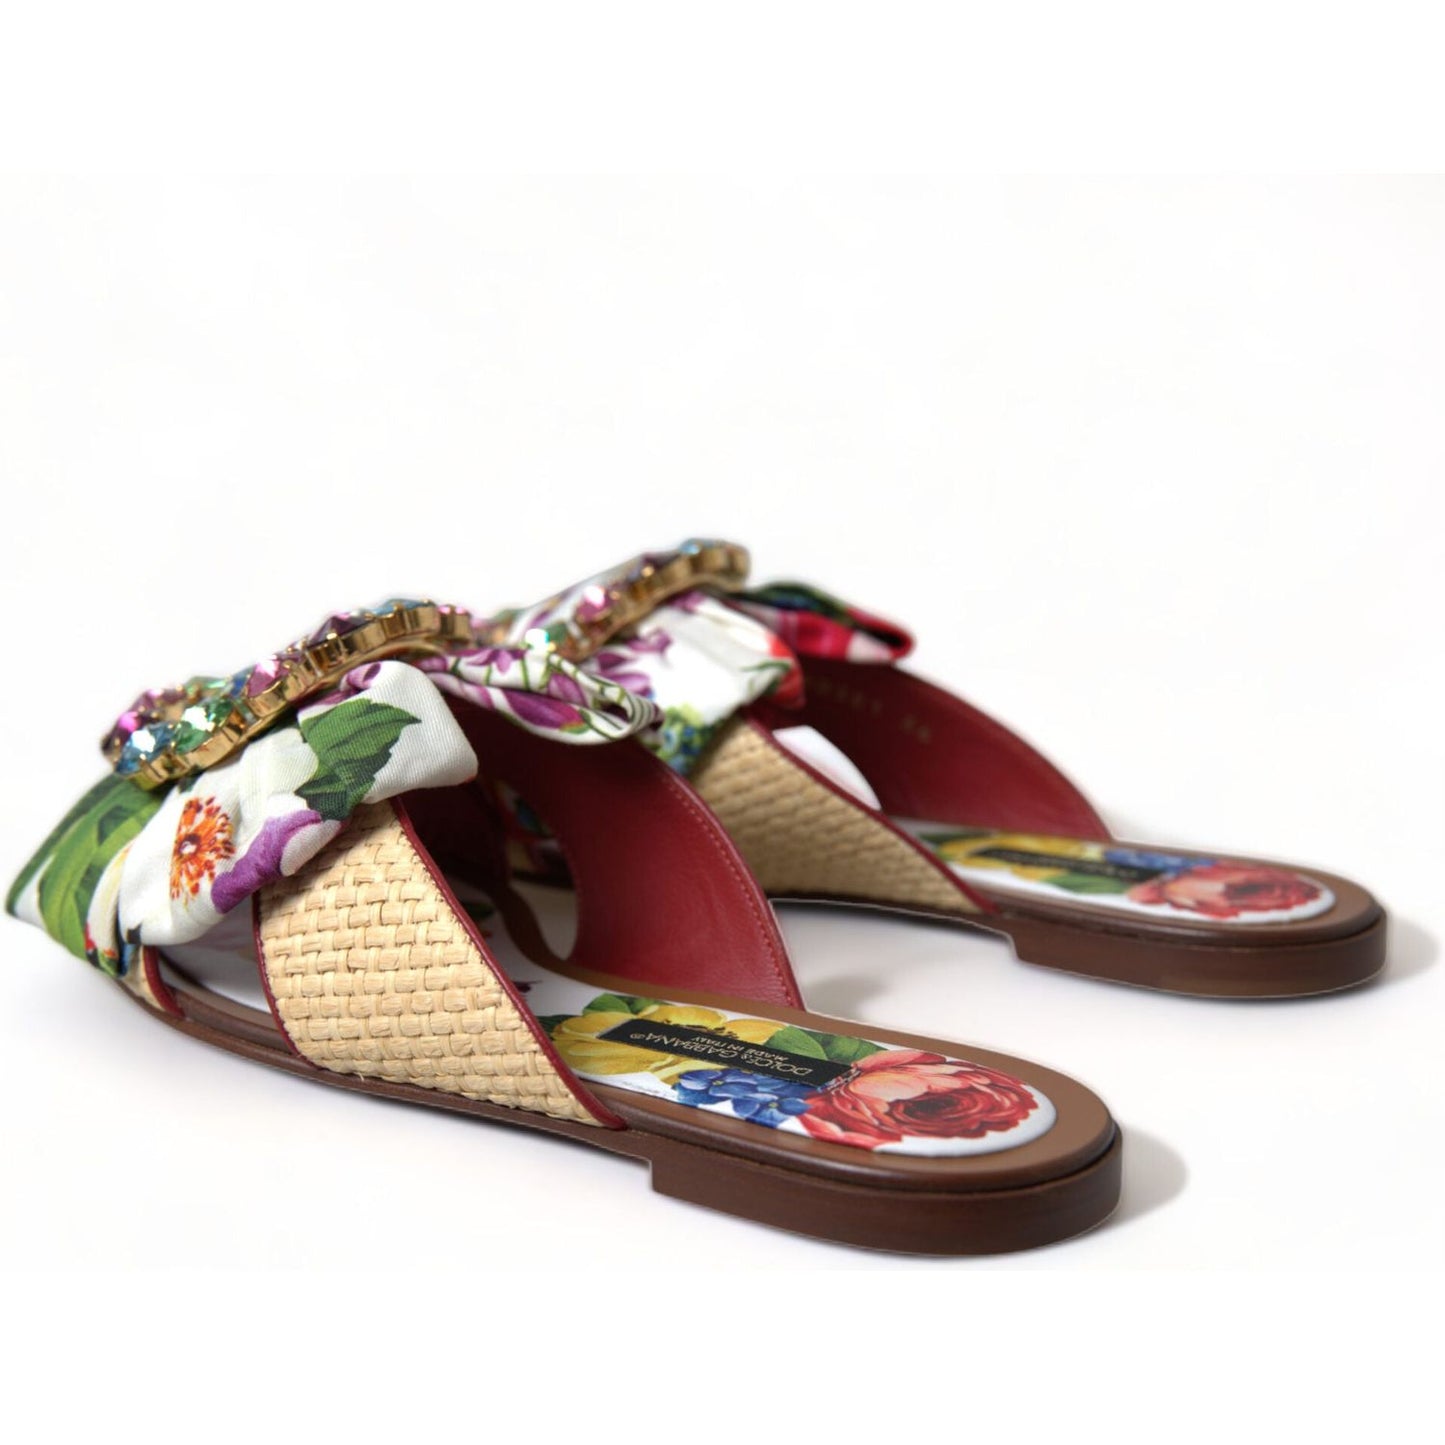 Dolce & Gabbana Exquisite Floral Print Flat Sandals multicolor-floral-flats-crystal-sandals-shoes